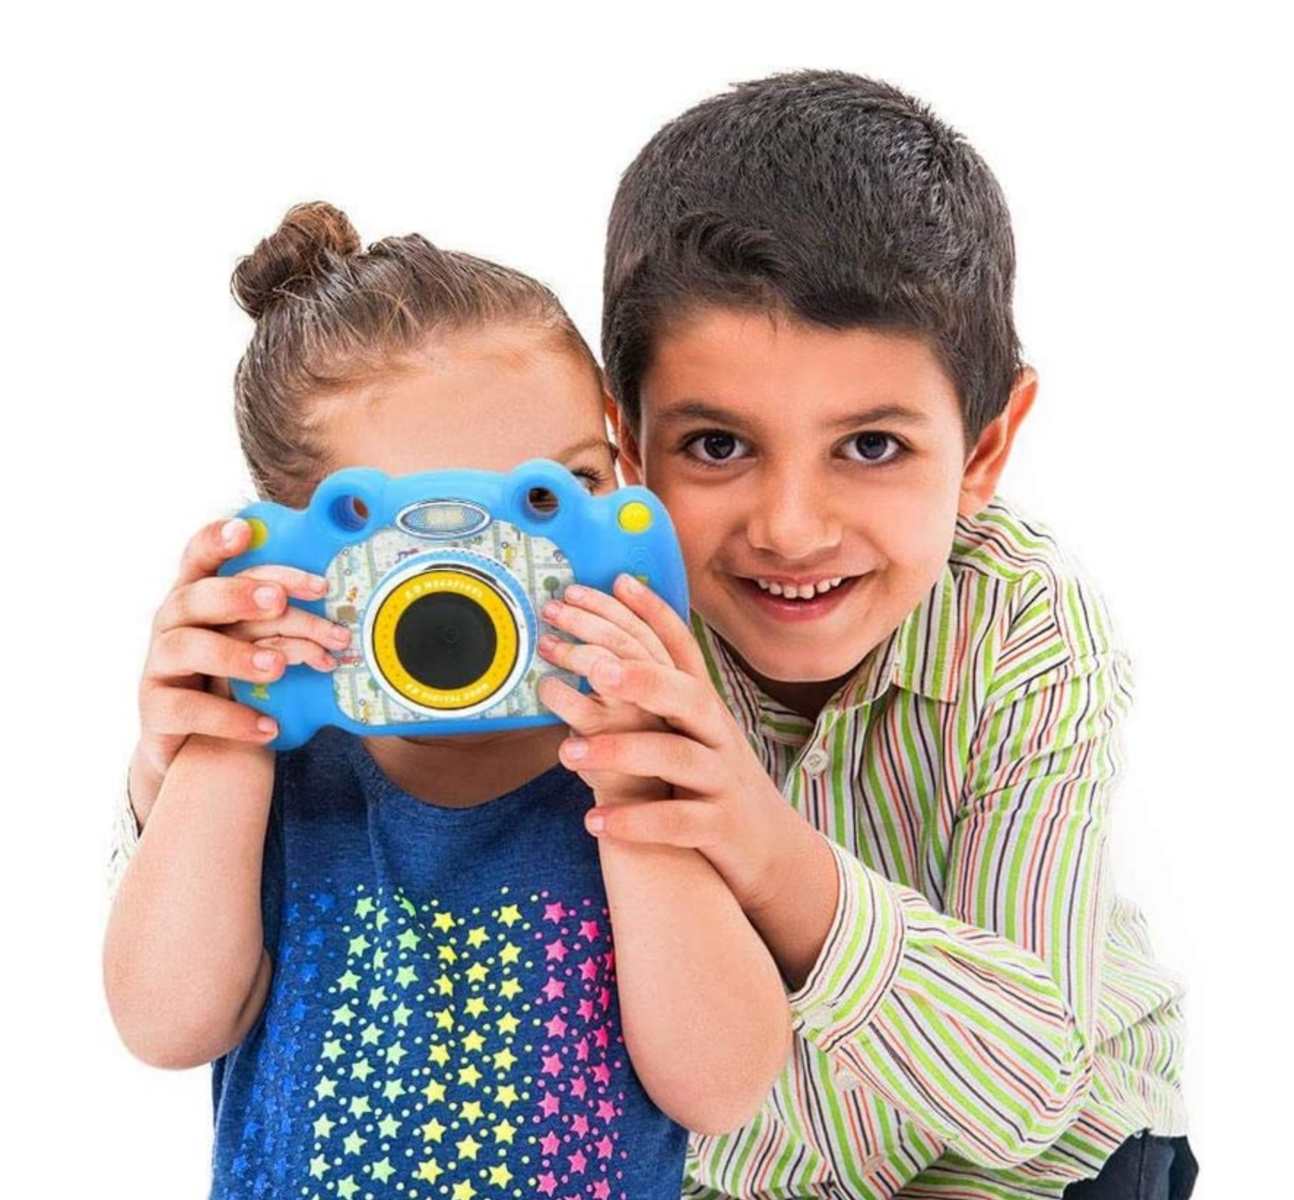 Easypix Kiddypix - Blizz (Blue) Digital camera for children - Blue